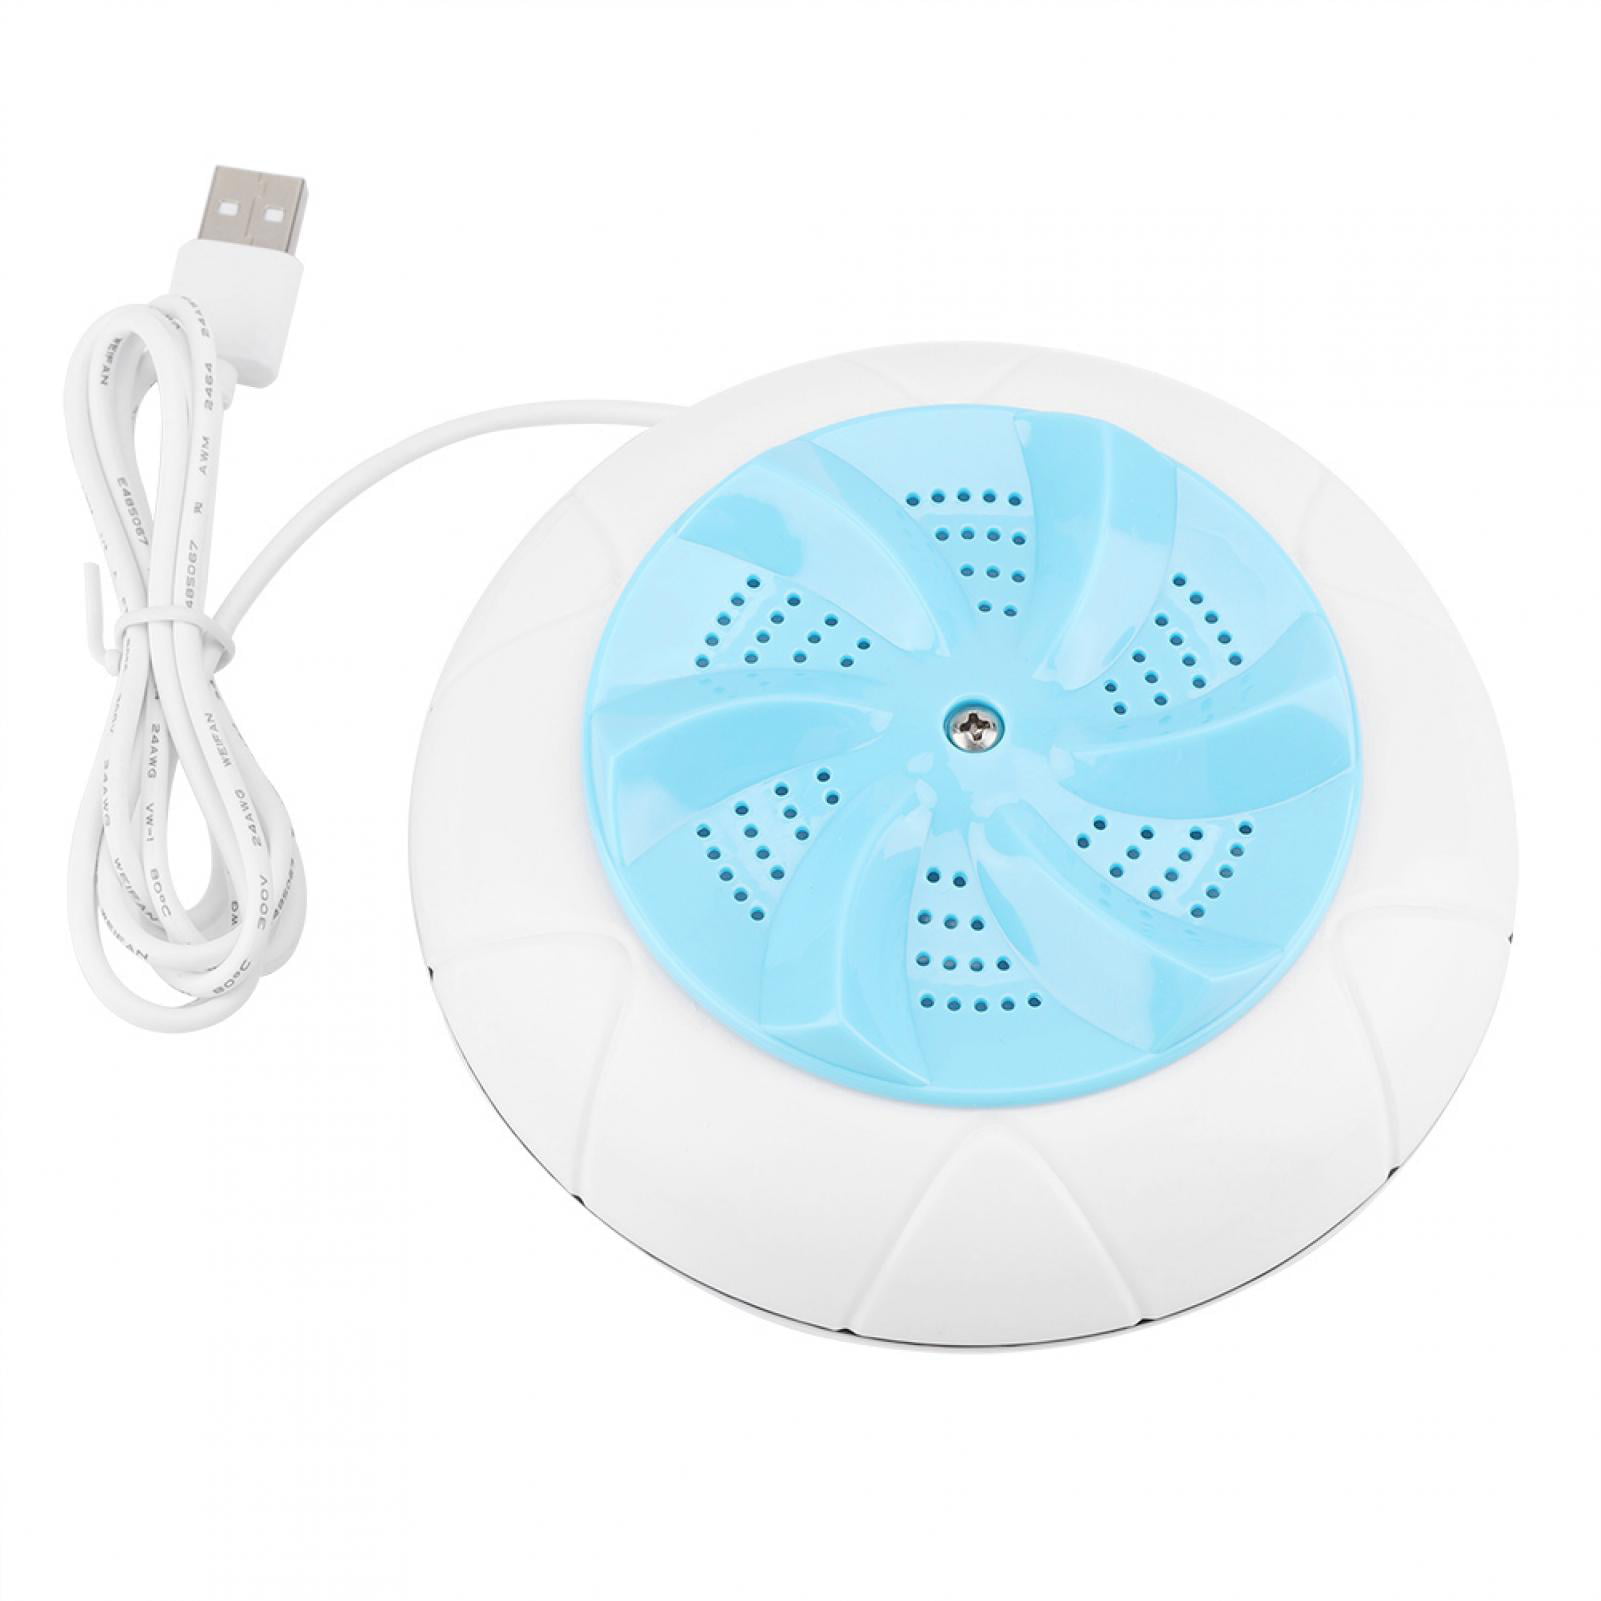 Mini USB Washing Machine Portable Rotating Ultrasonic Turbine Laundry Washer 